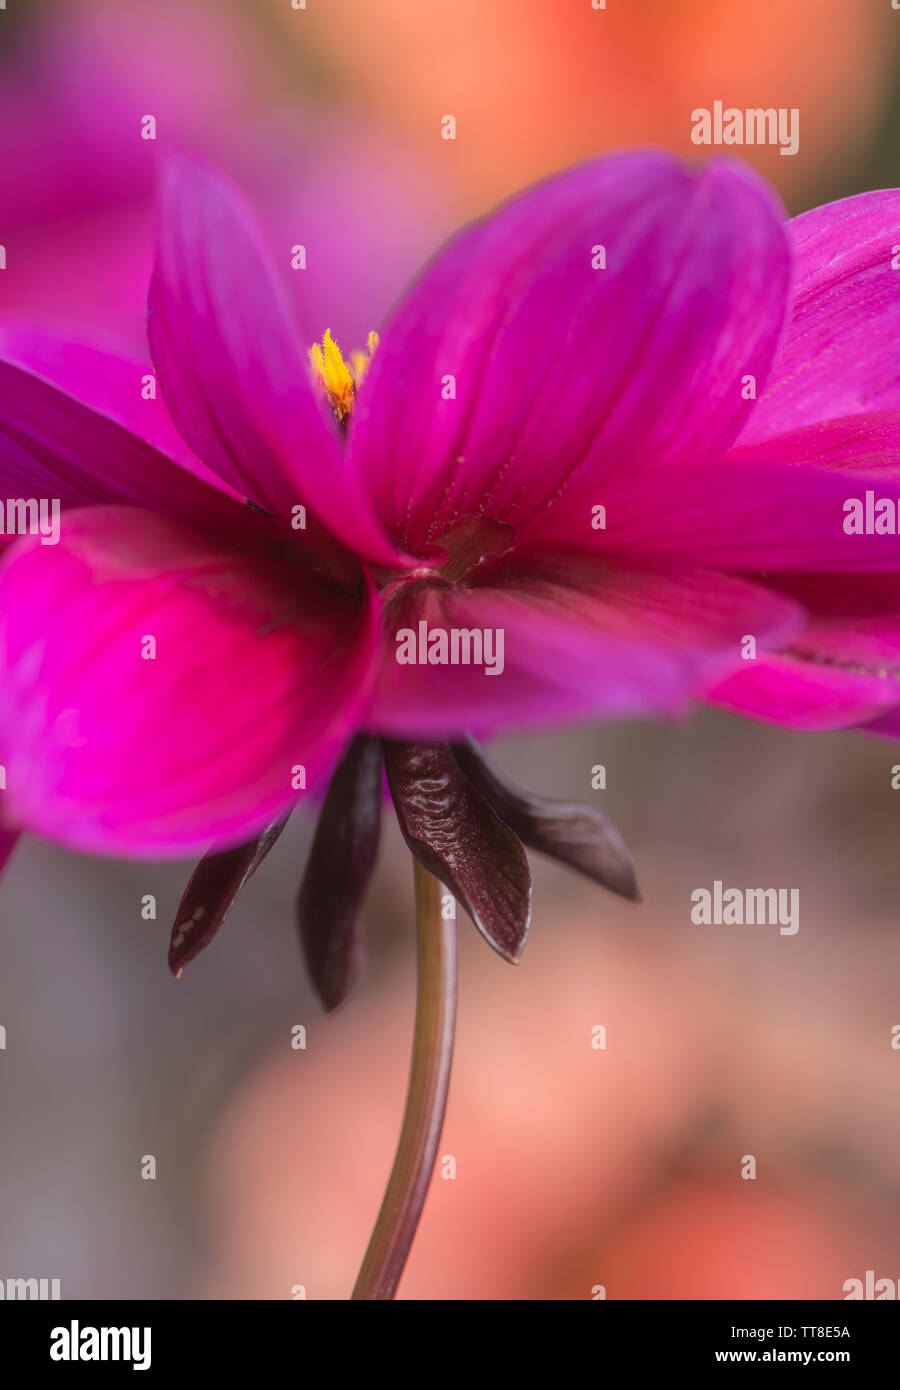 Pink Dahlia flower showing stamens & sepals Stock Photo